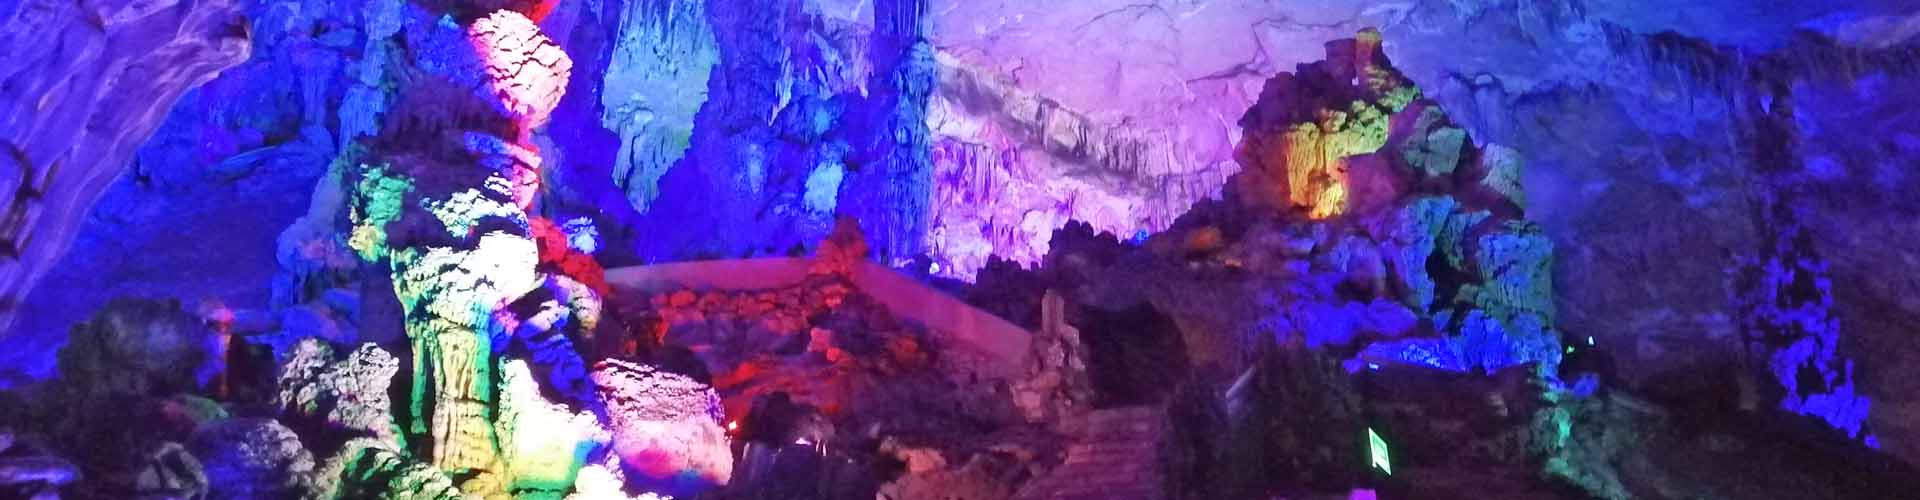 Grotte de la flute de roseau